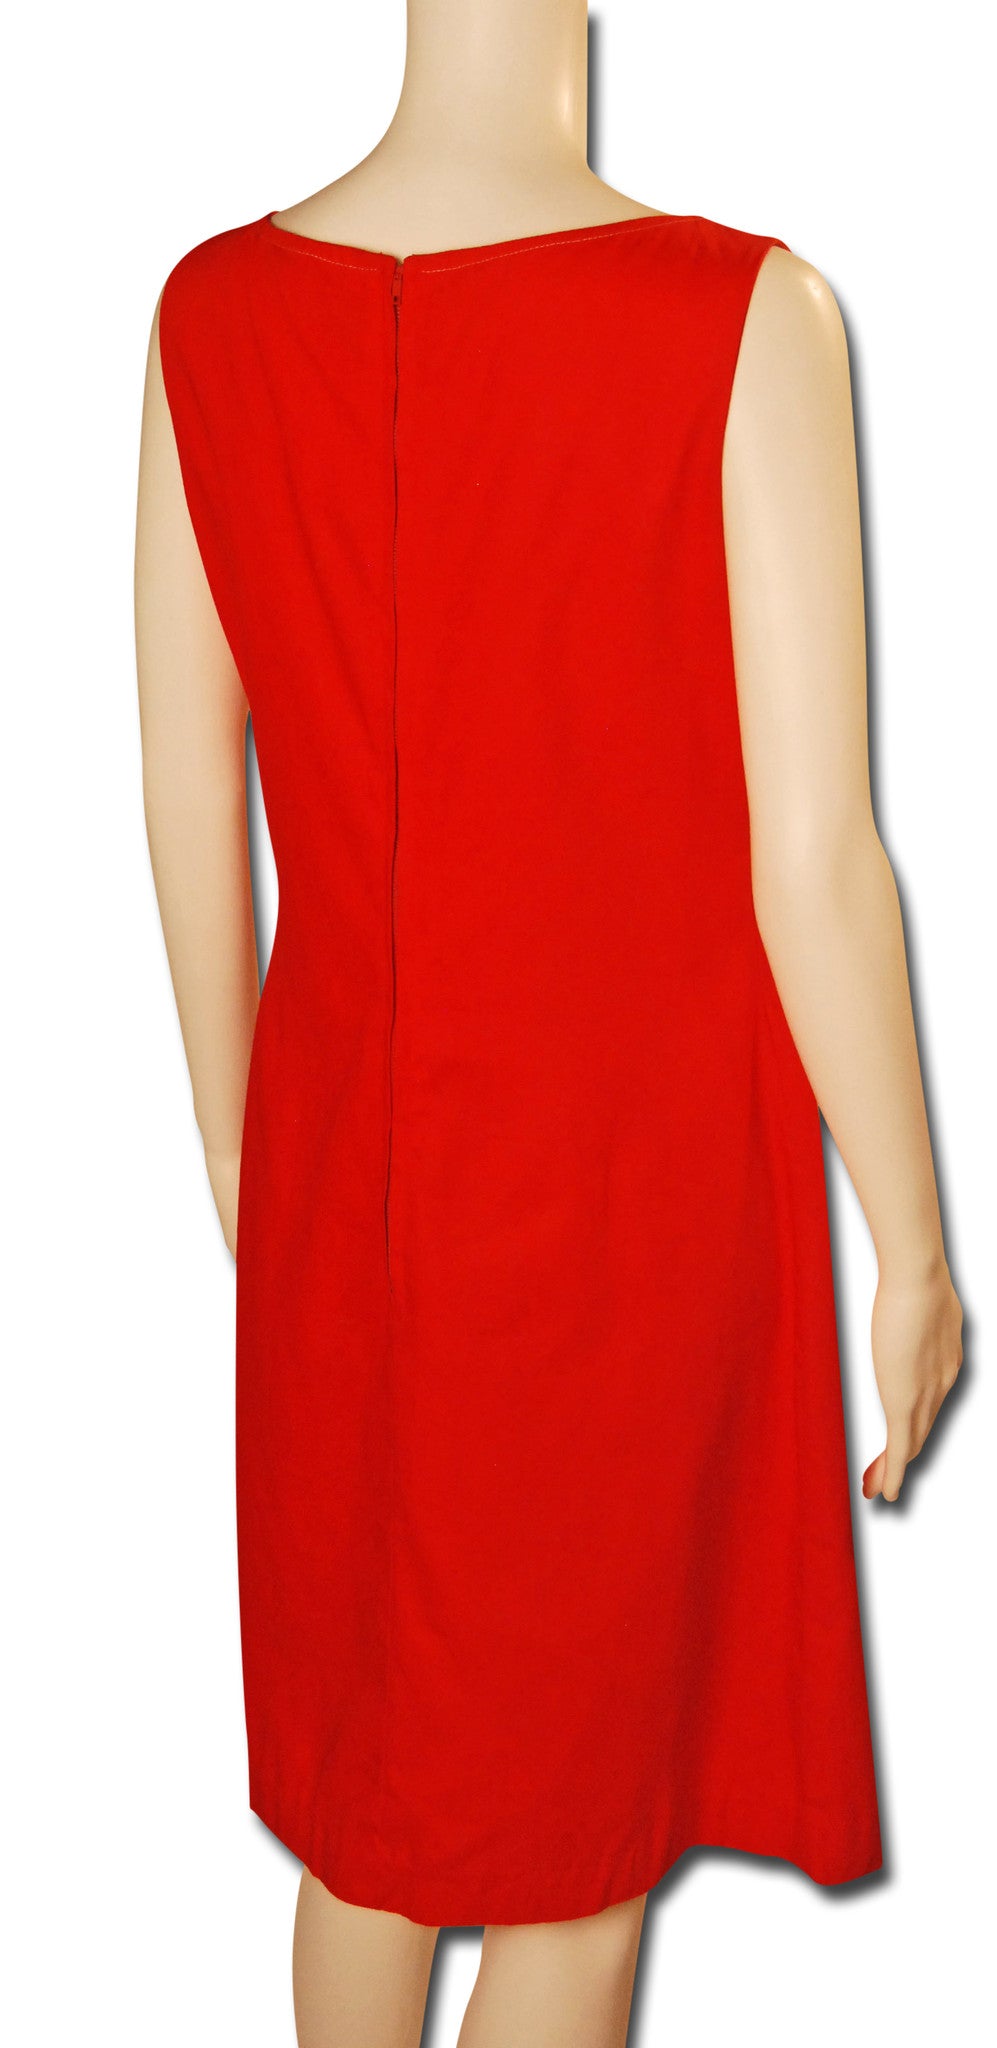 Scarlet 1960s Cotton Dress, Zip Surprise - refashioner